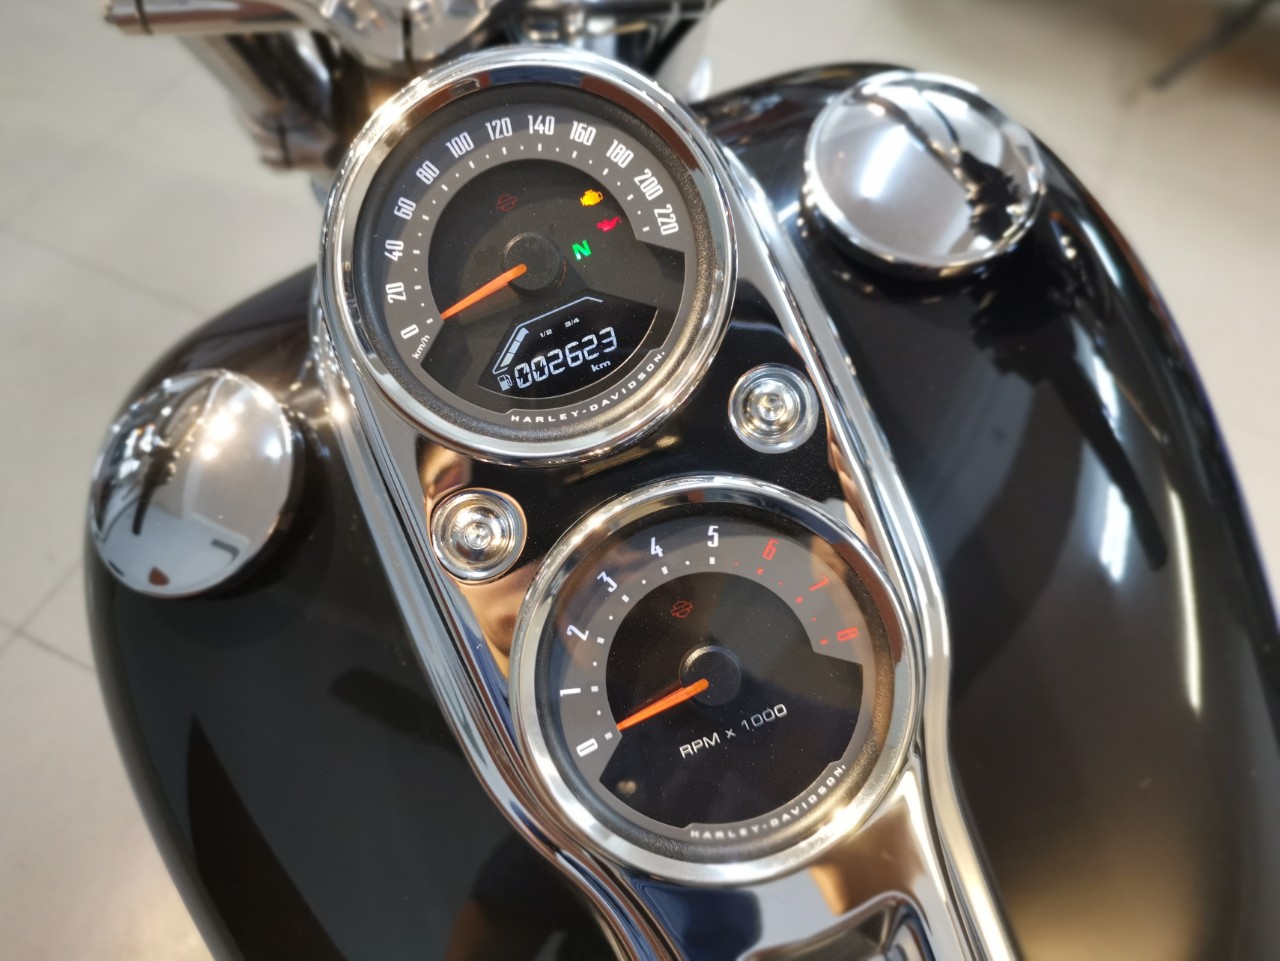 Harley Davidson Softail Low Rider 2019